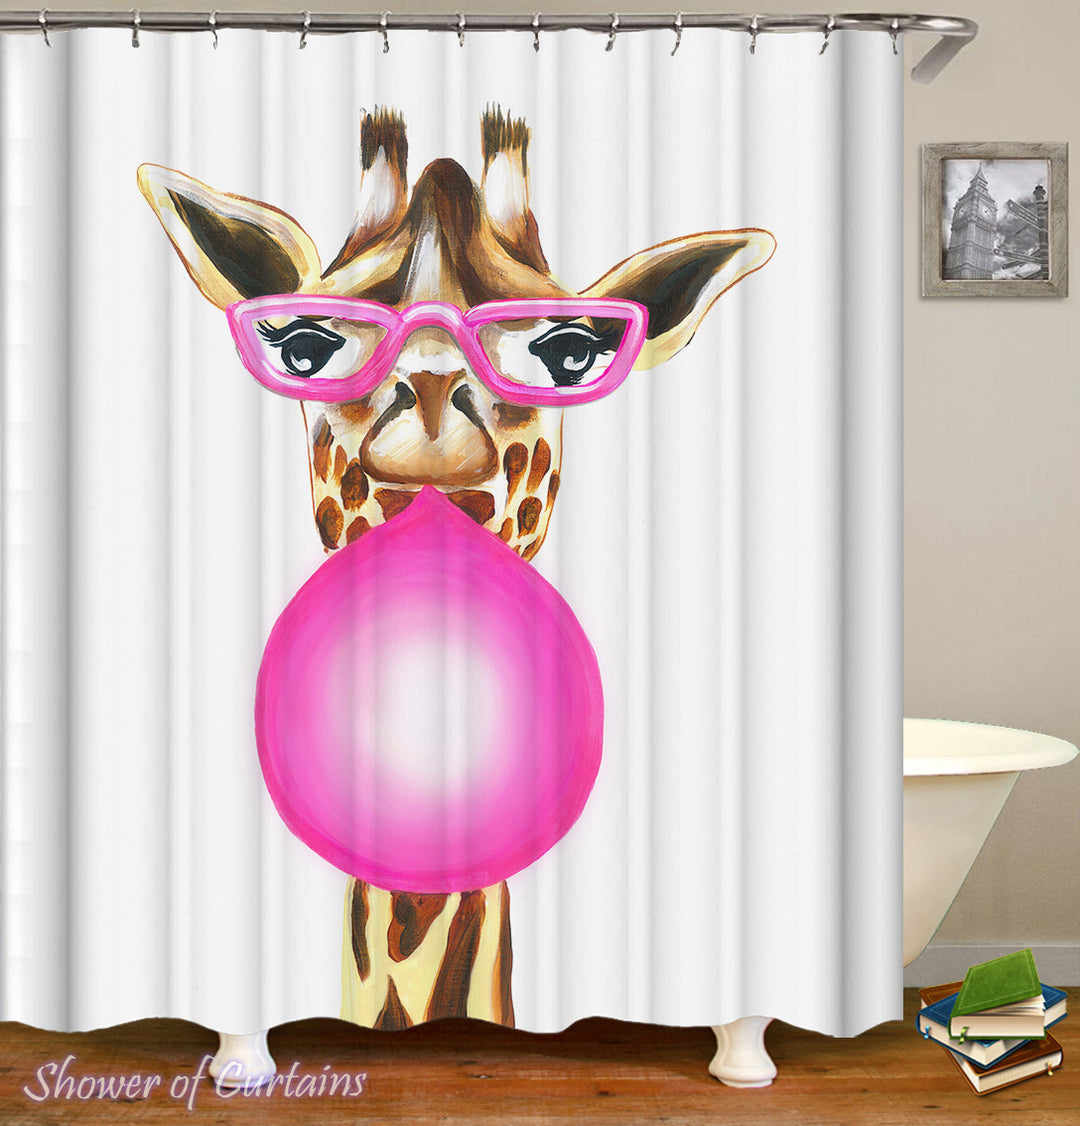 Bubble Gum Lady Giraffe shower curtain